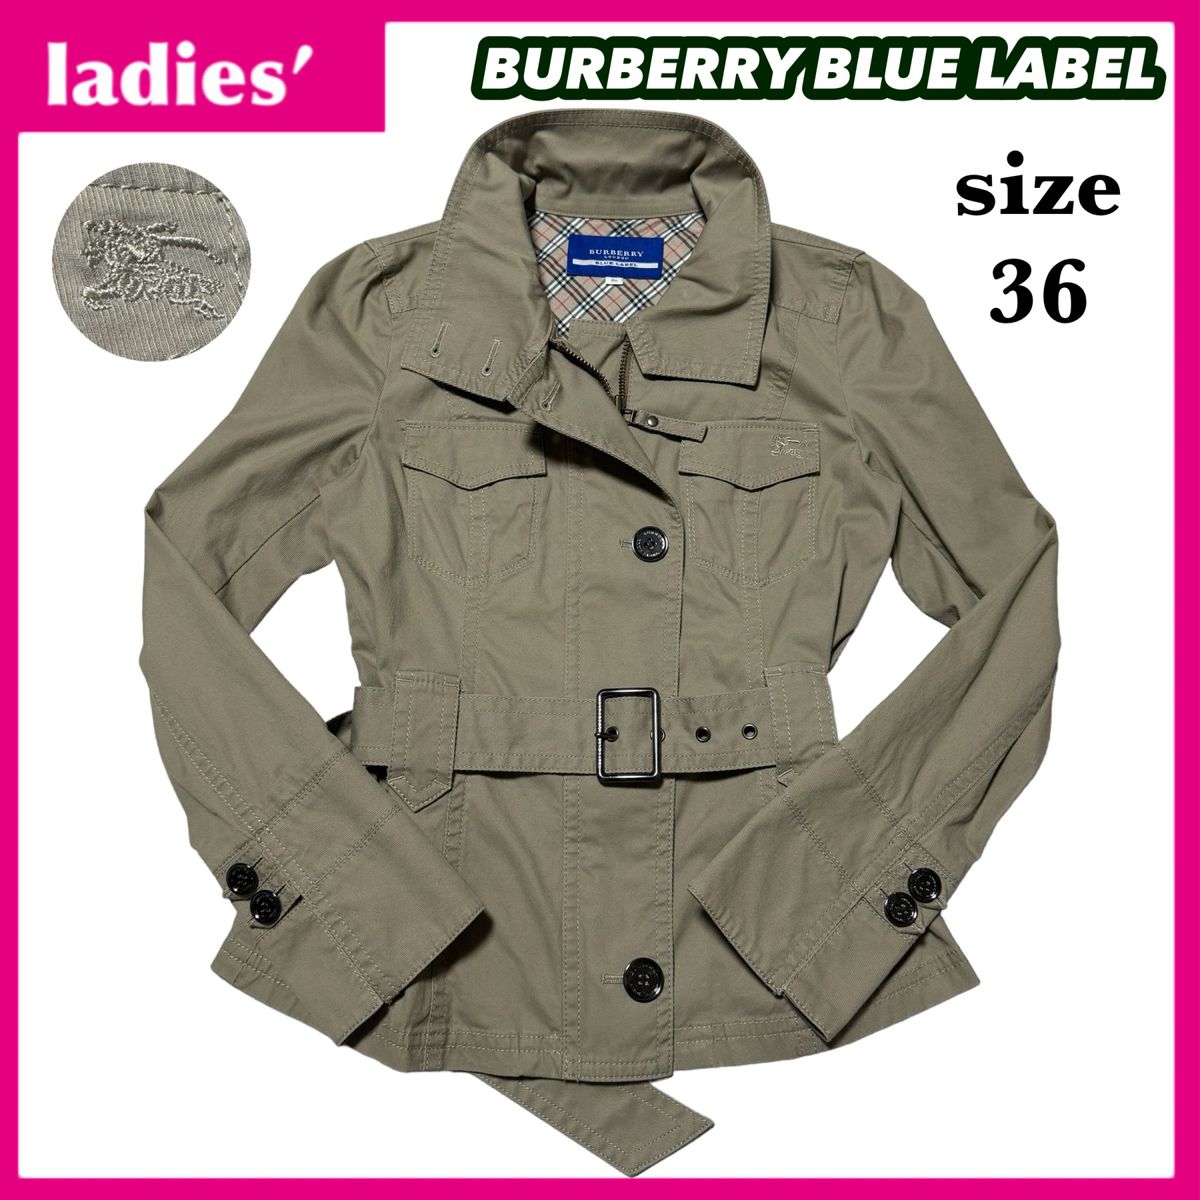 BURBERRY BLUE LABEL バーバリーブルーレーベル ショート丈 コート サイズ36 S相当 ノバチェック